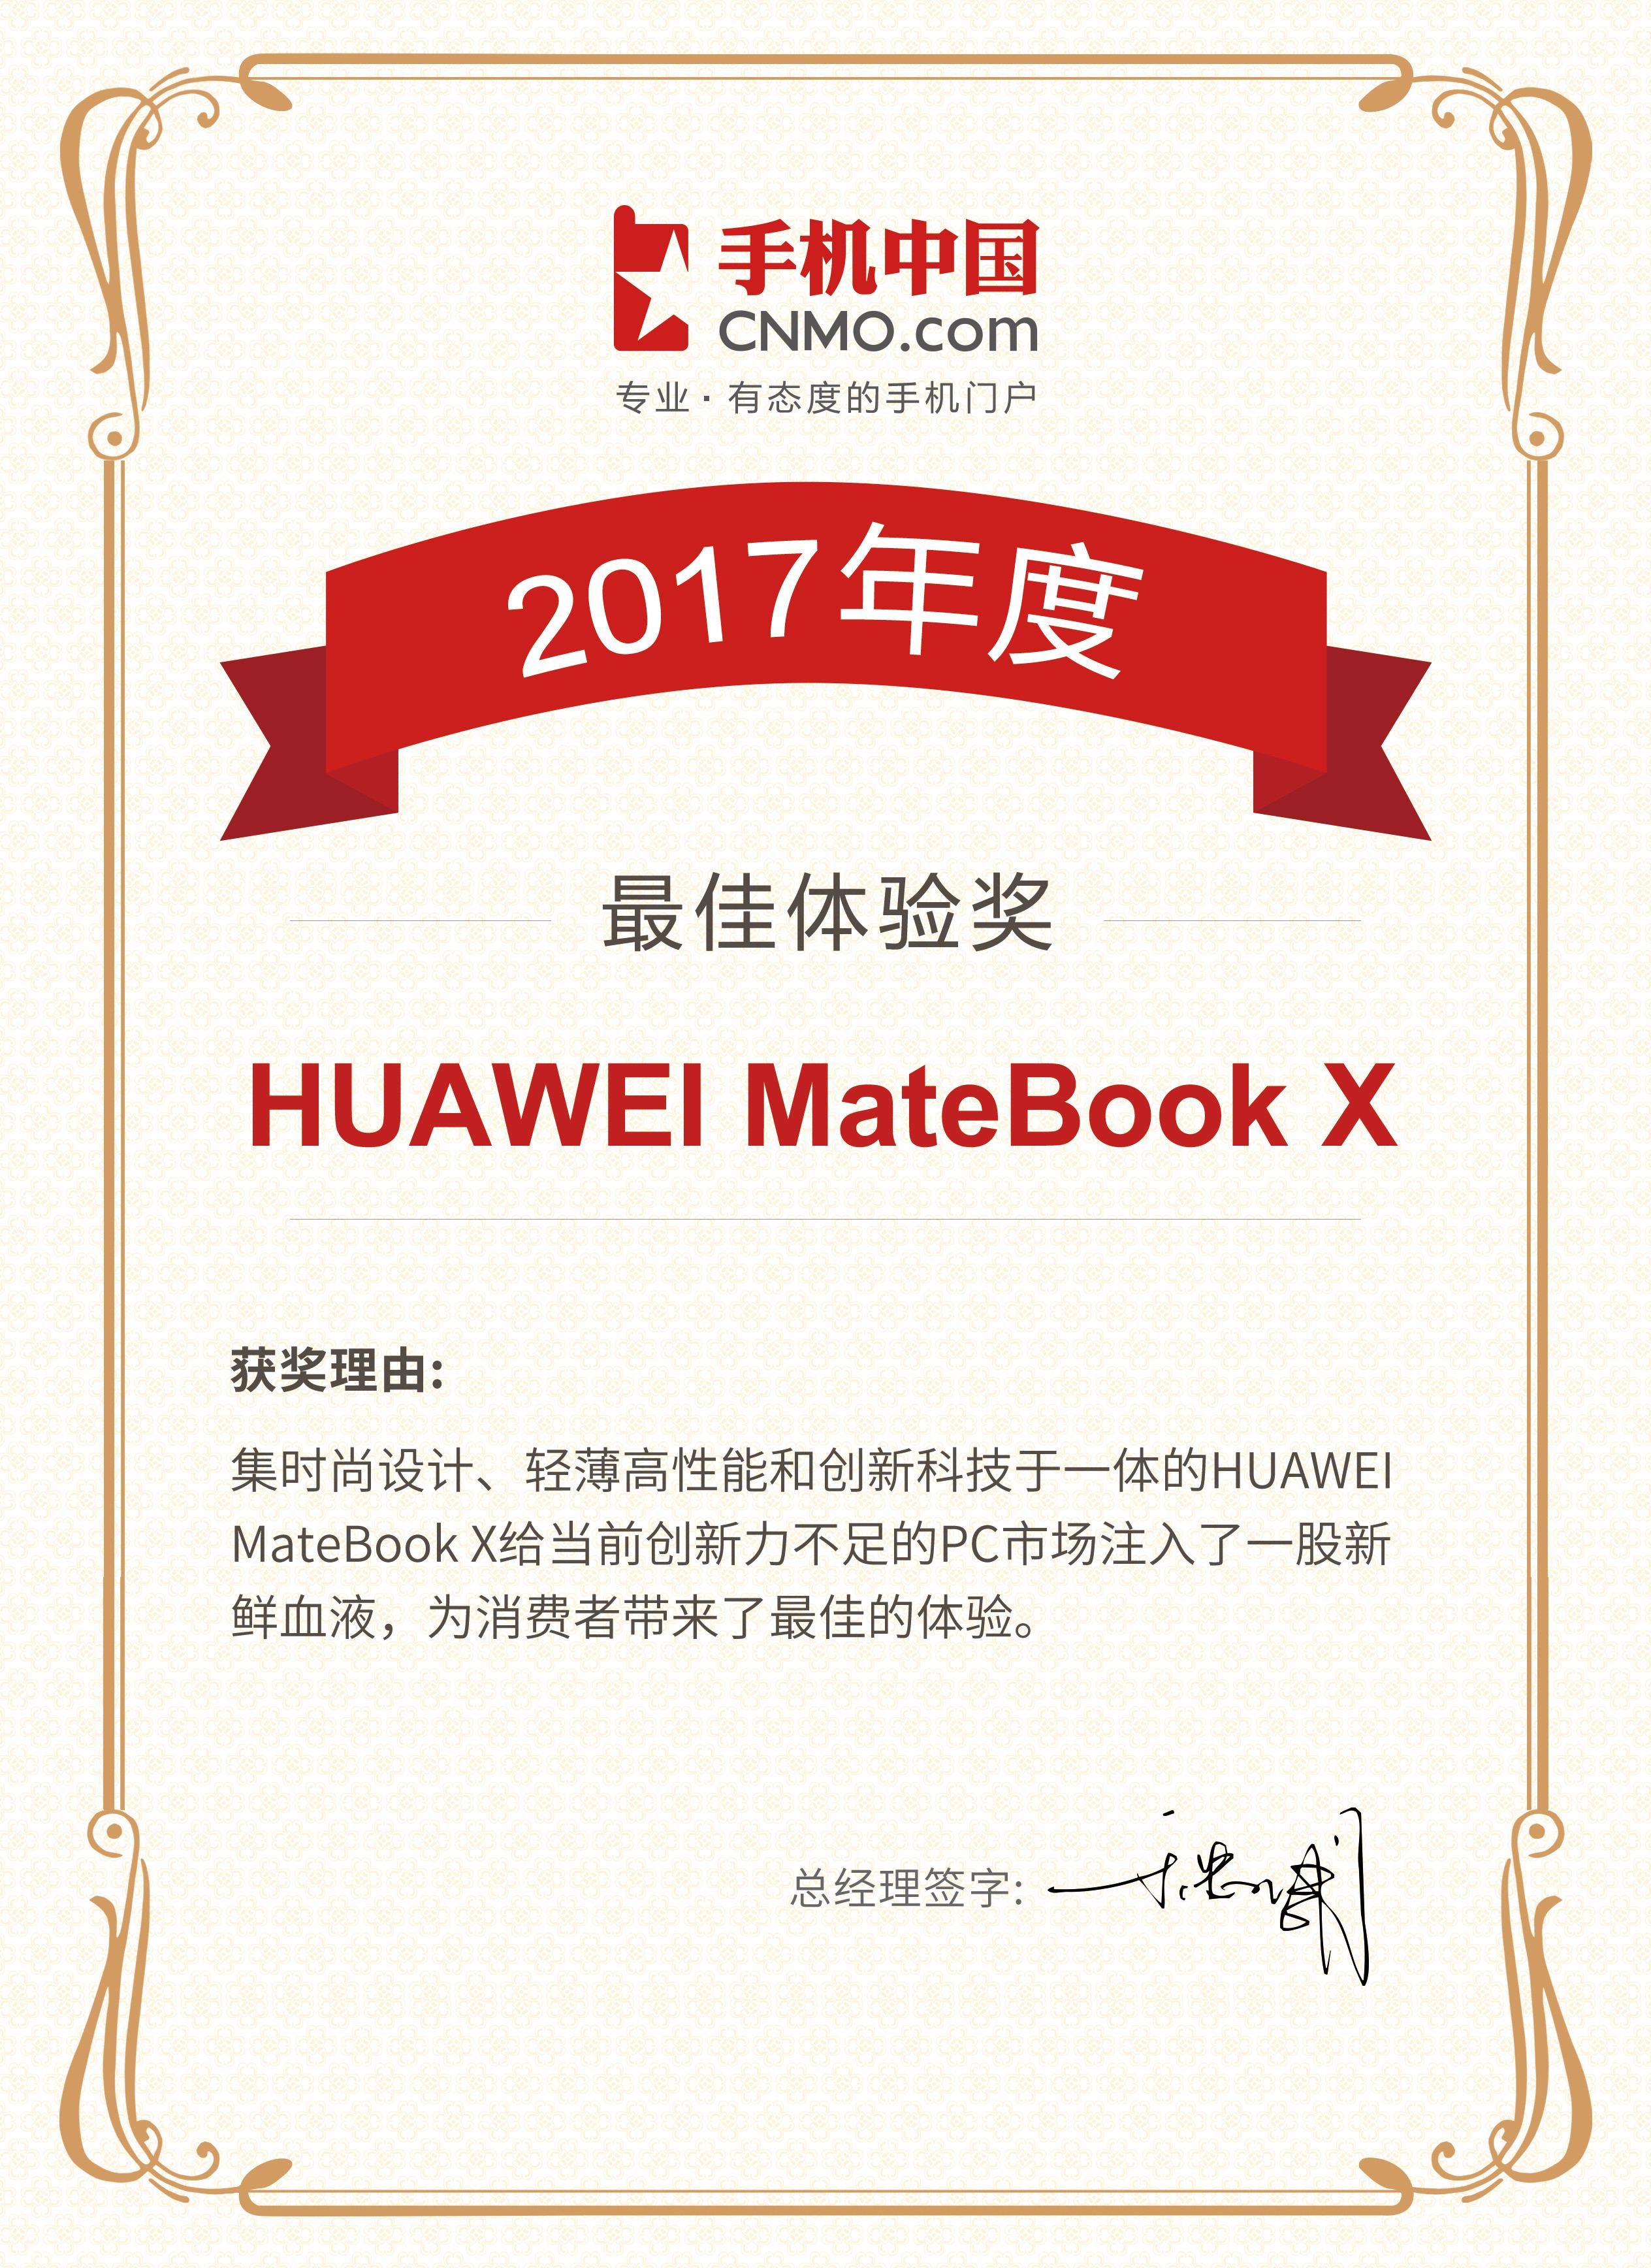 HUAWEI MateBook X获手机中国“2017年最佳体验奖” 立异引领行业【数码&手机】风气中国网